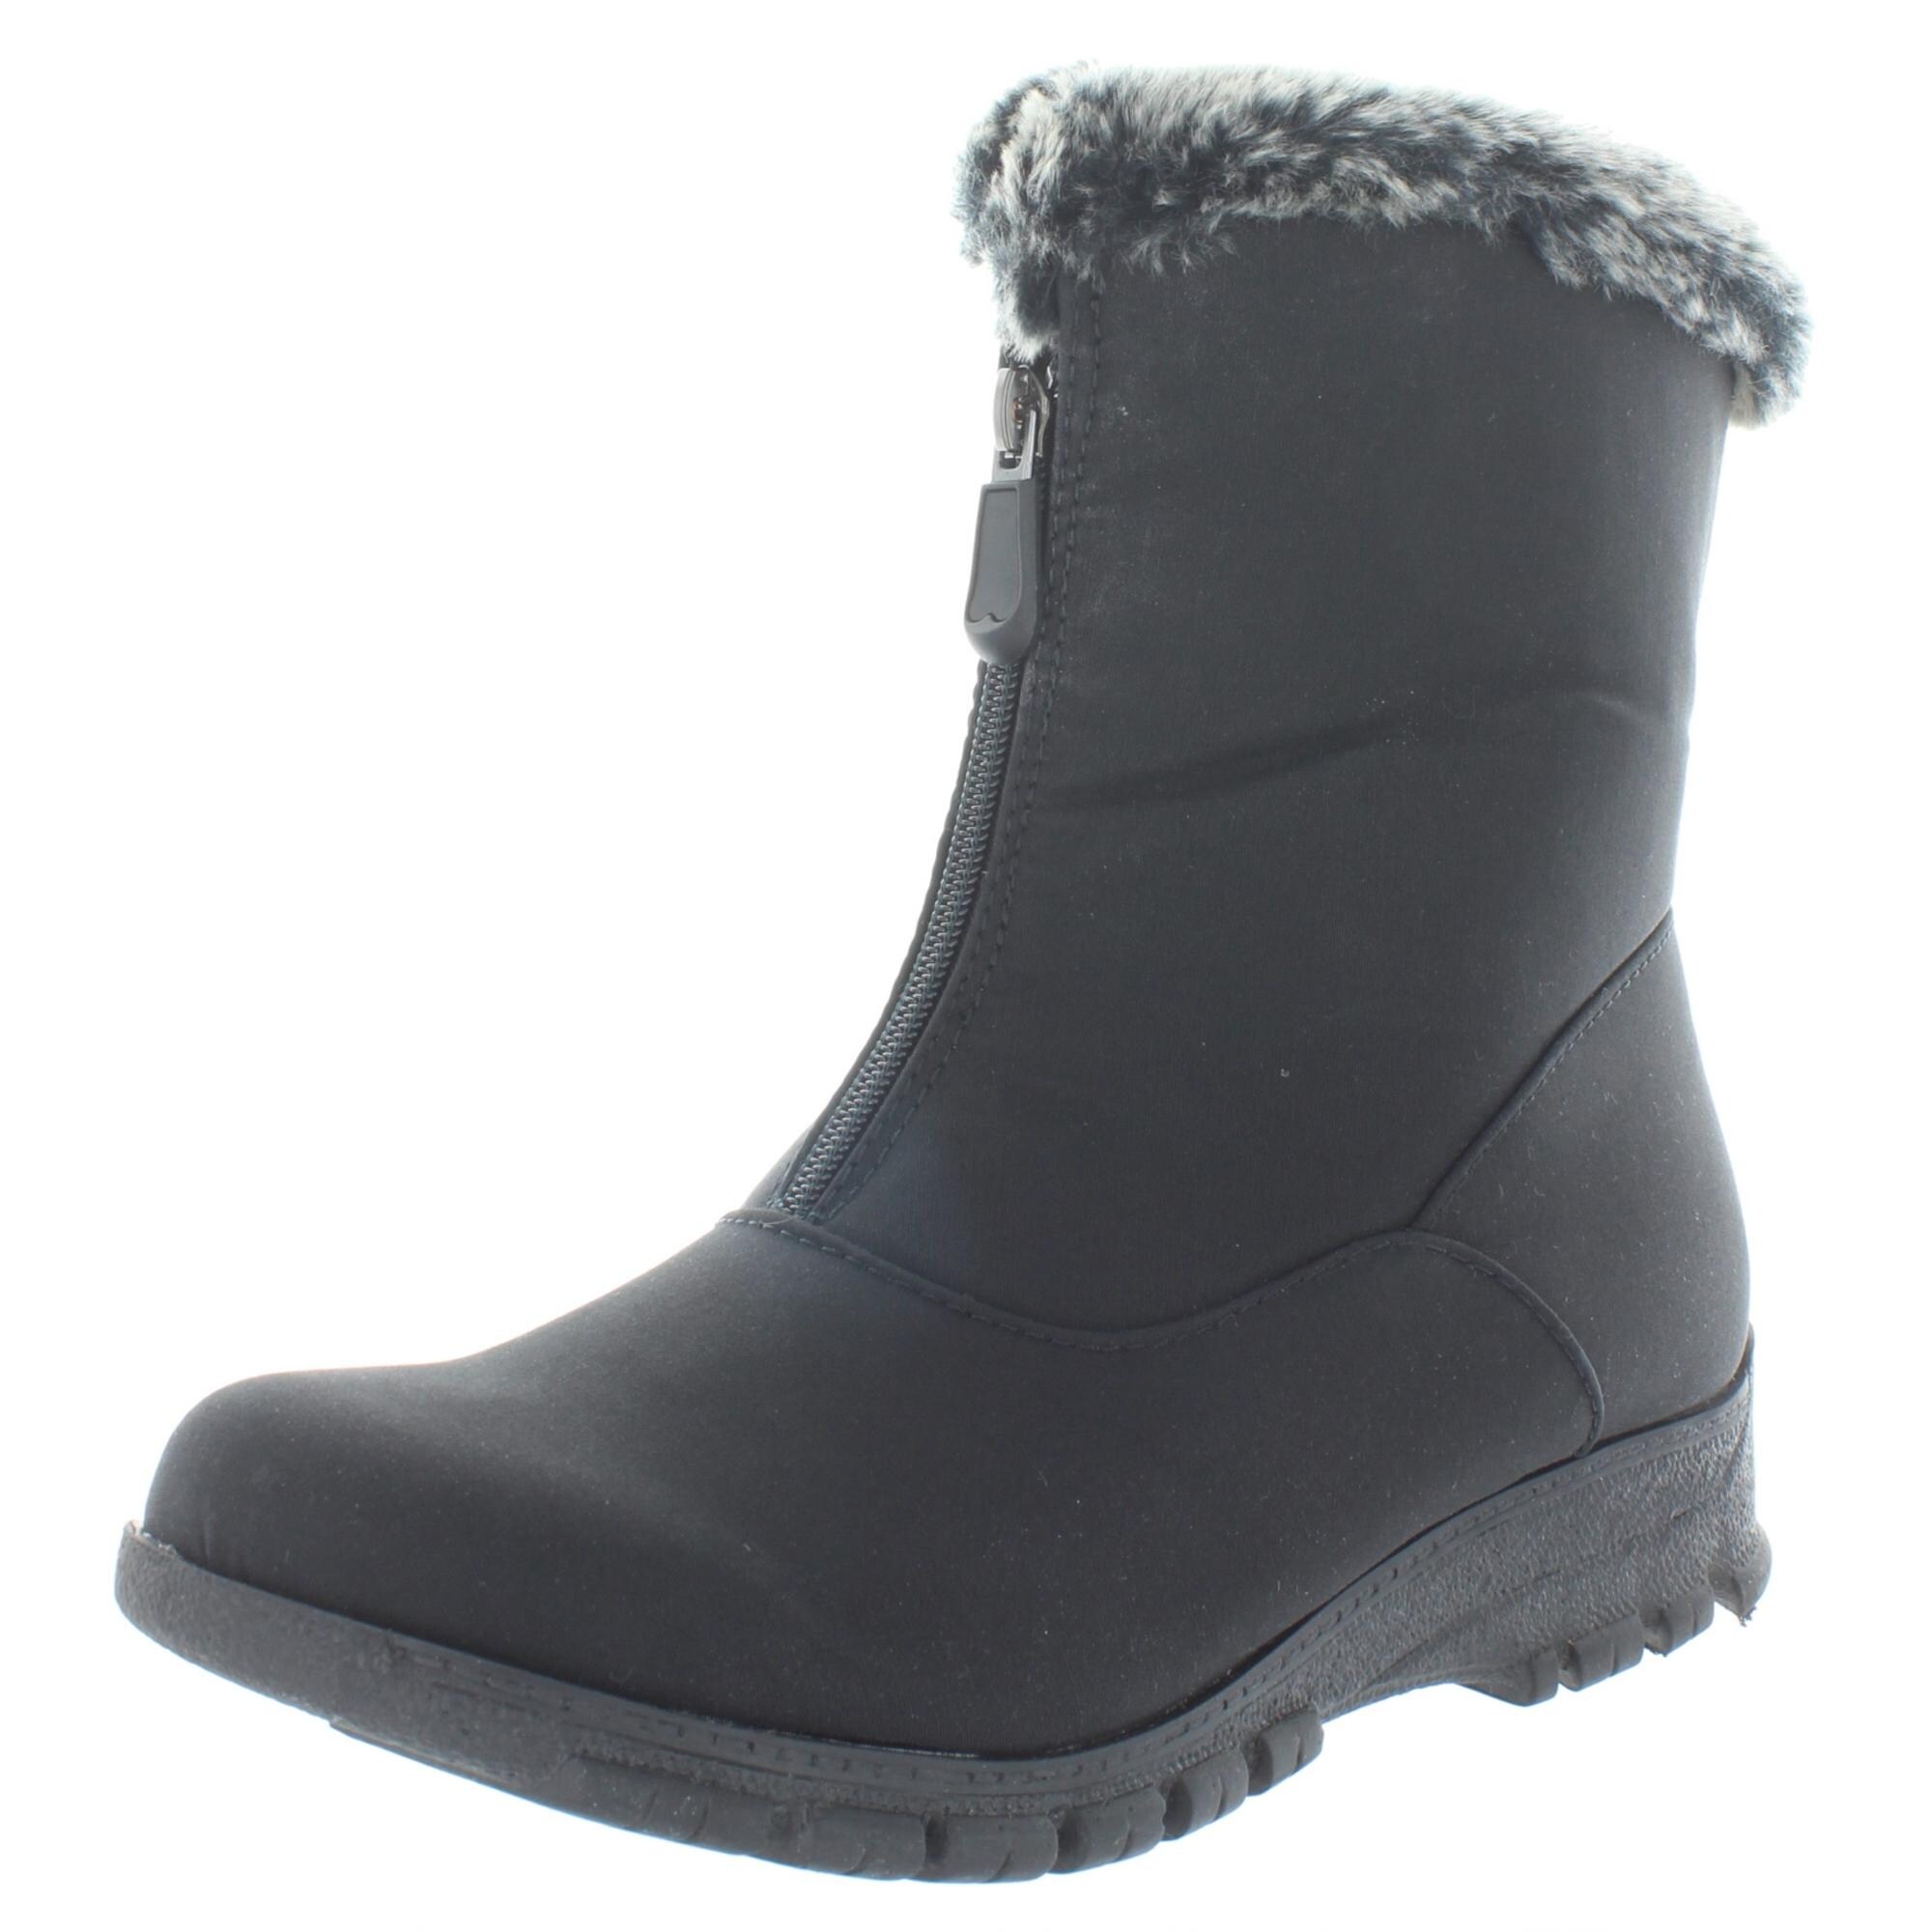 toe warmers winter boots